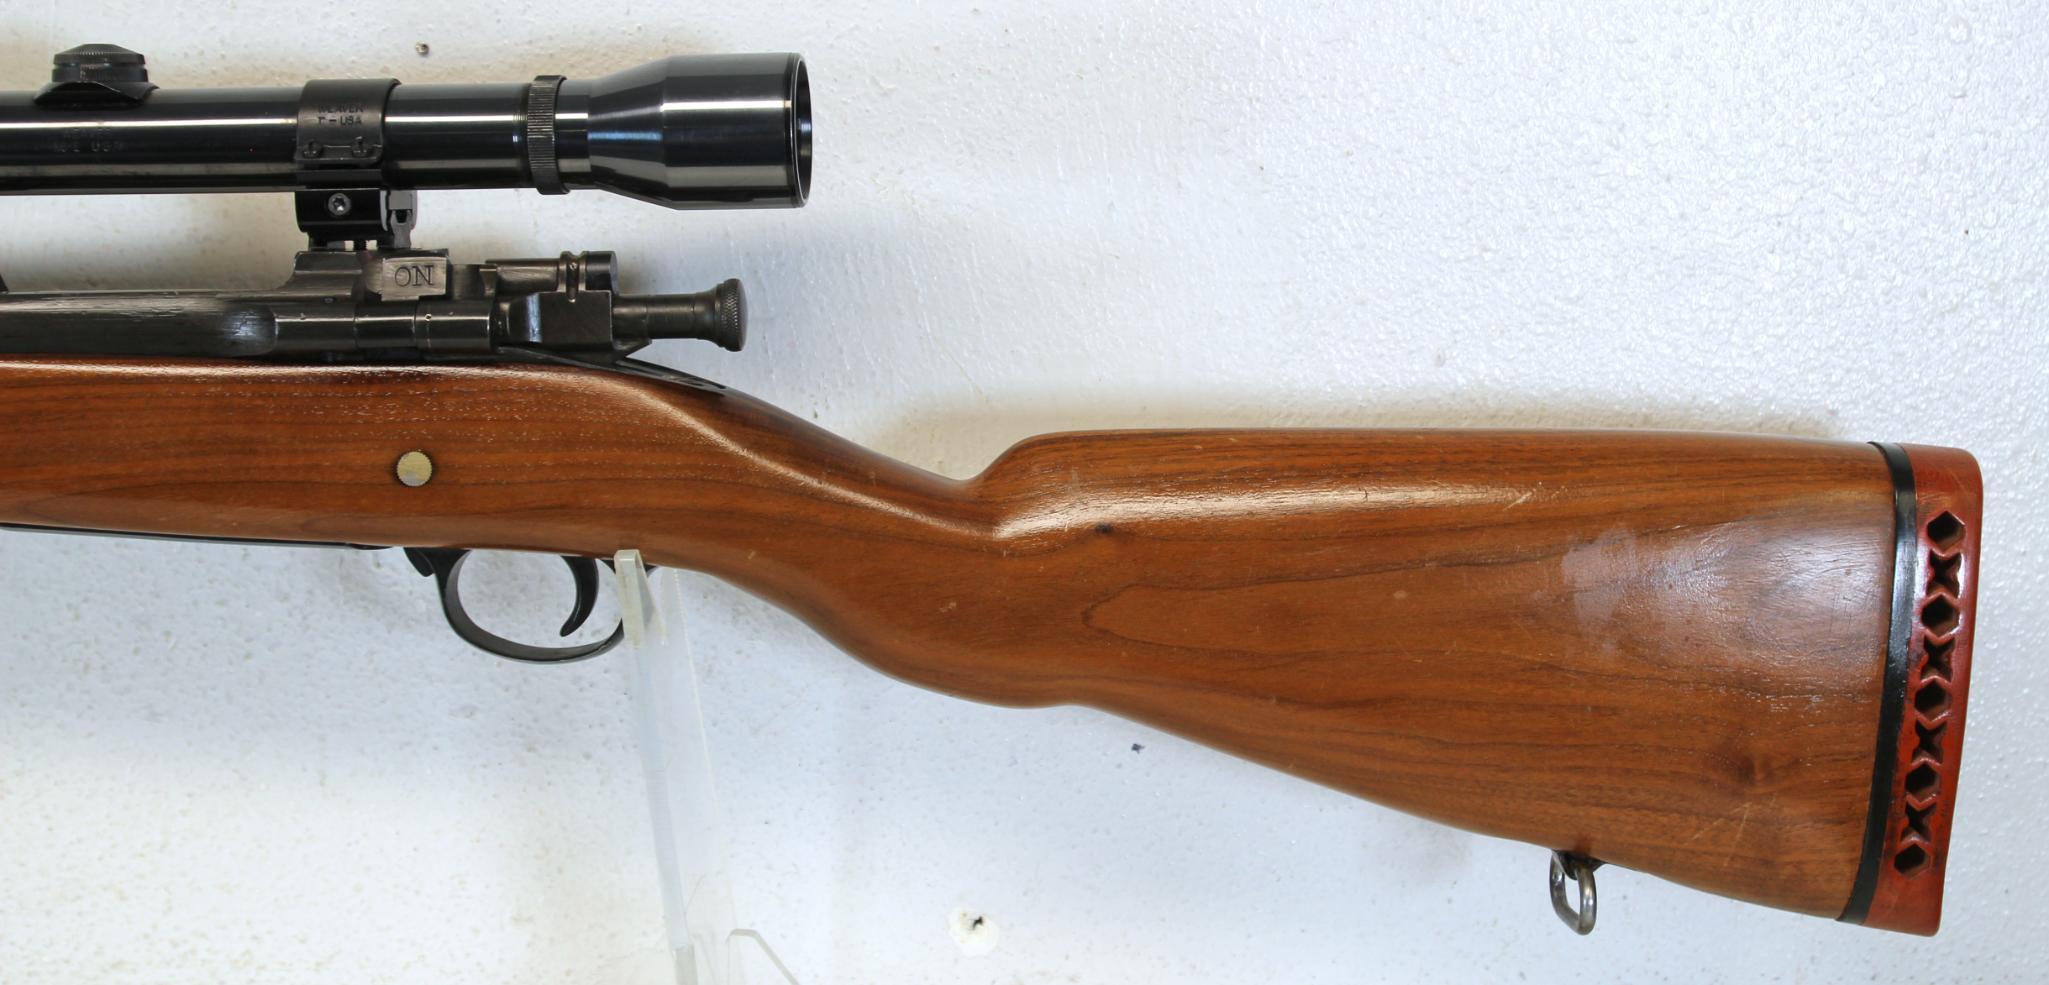 U.S. Smith Corona 03-A3 Sporterized .30-06 Bolt Action Rifle w/Weaver K6-E Scope SN#3653776...